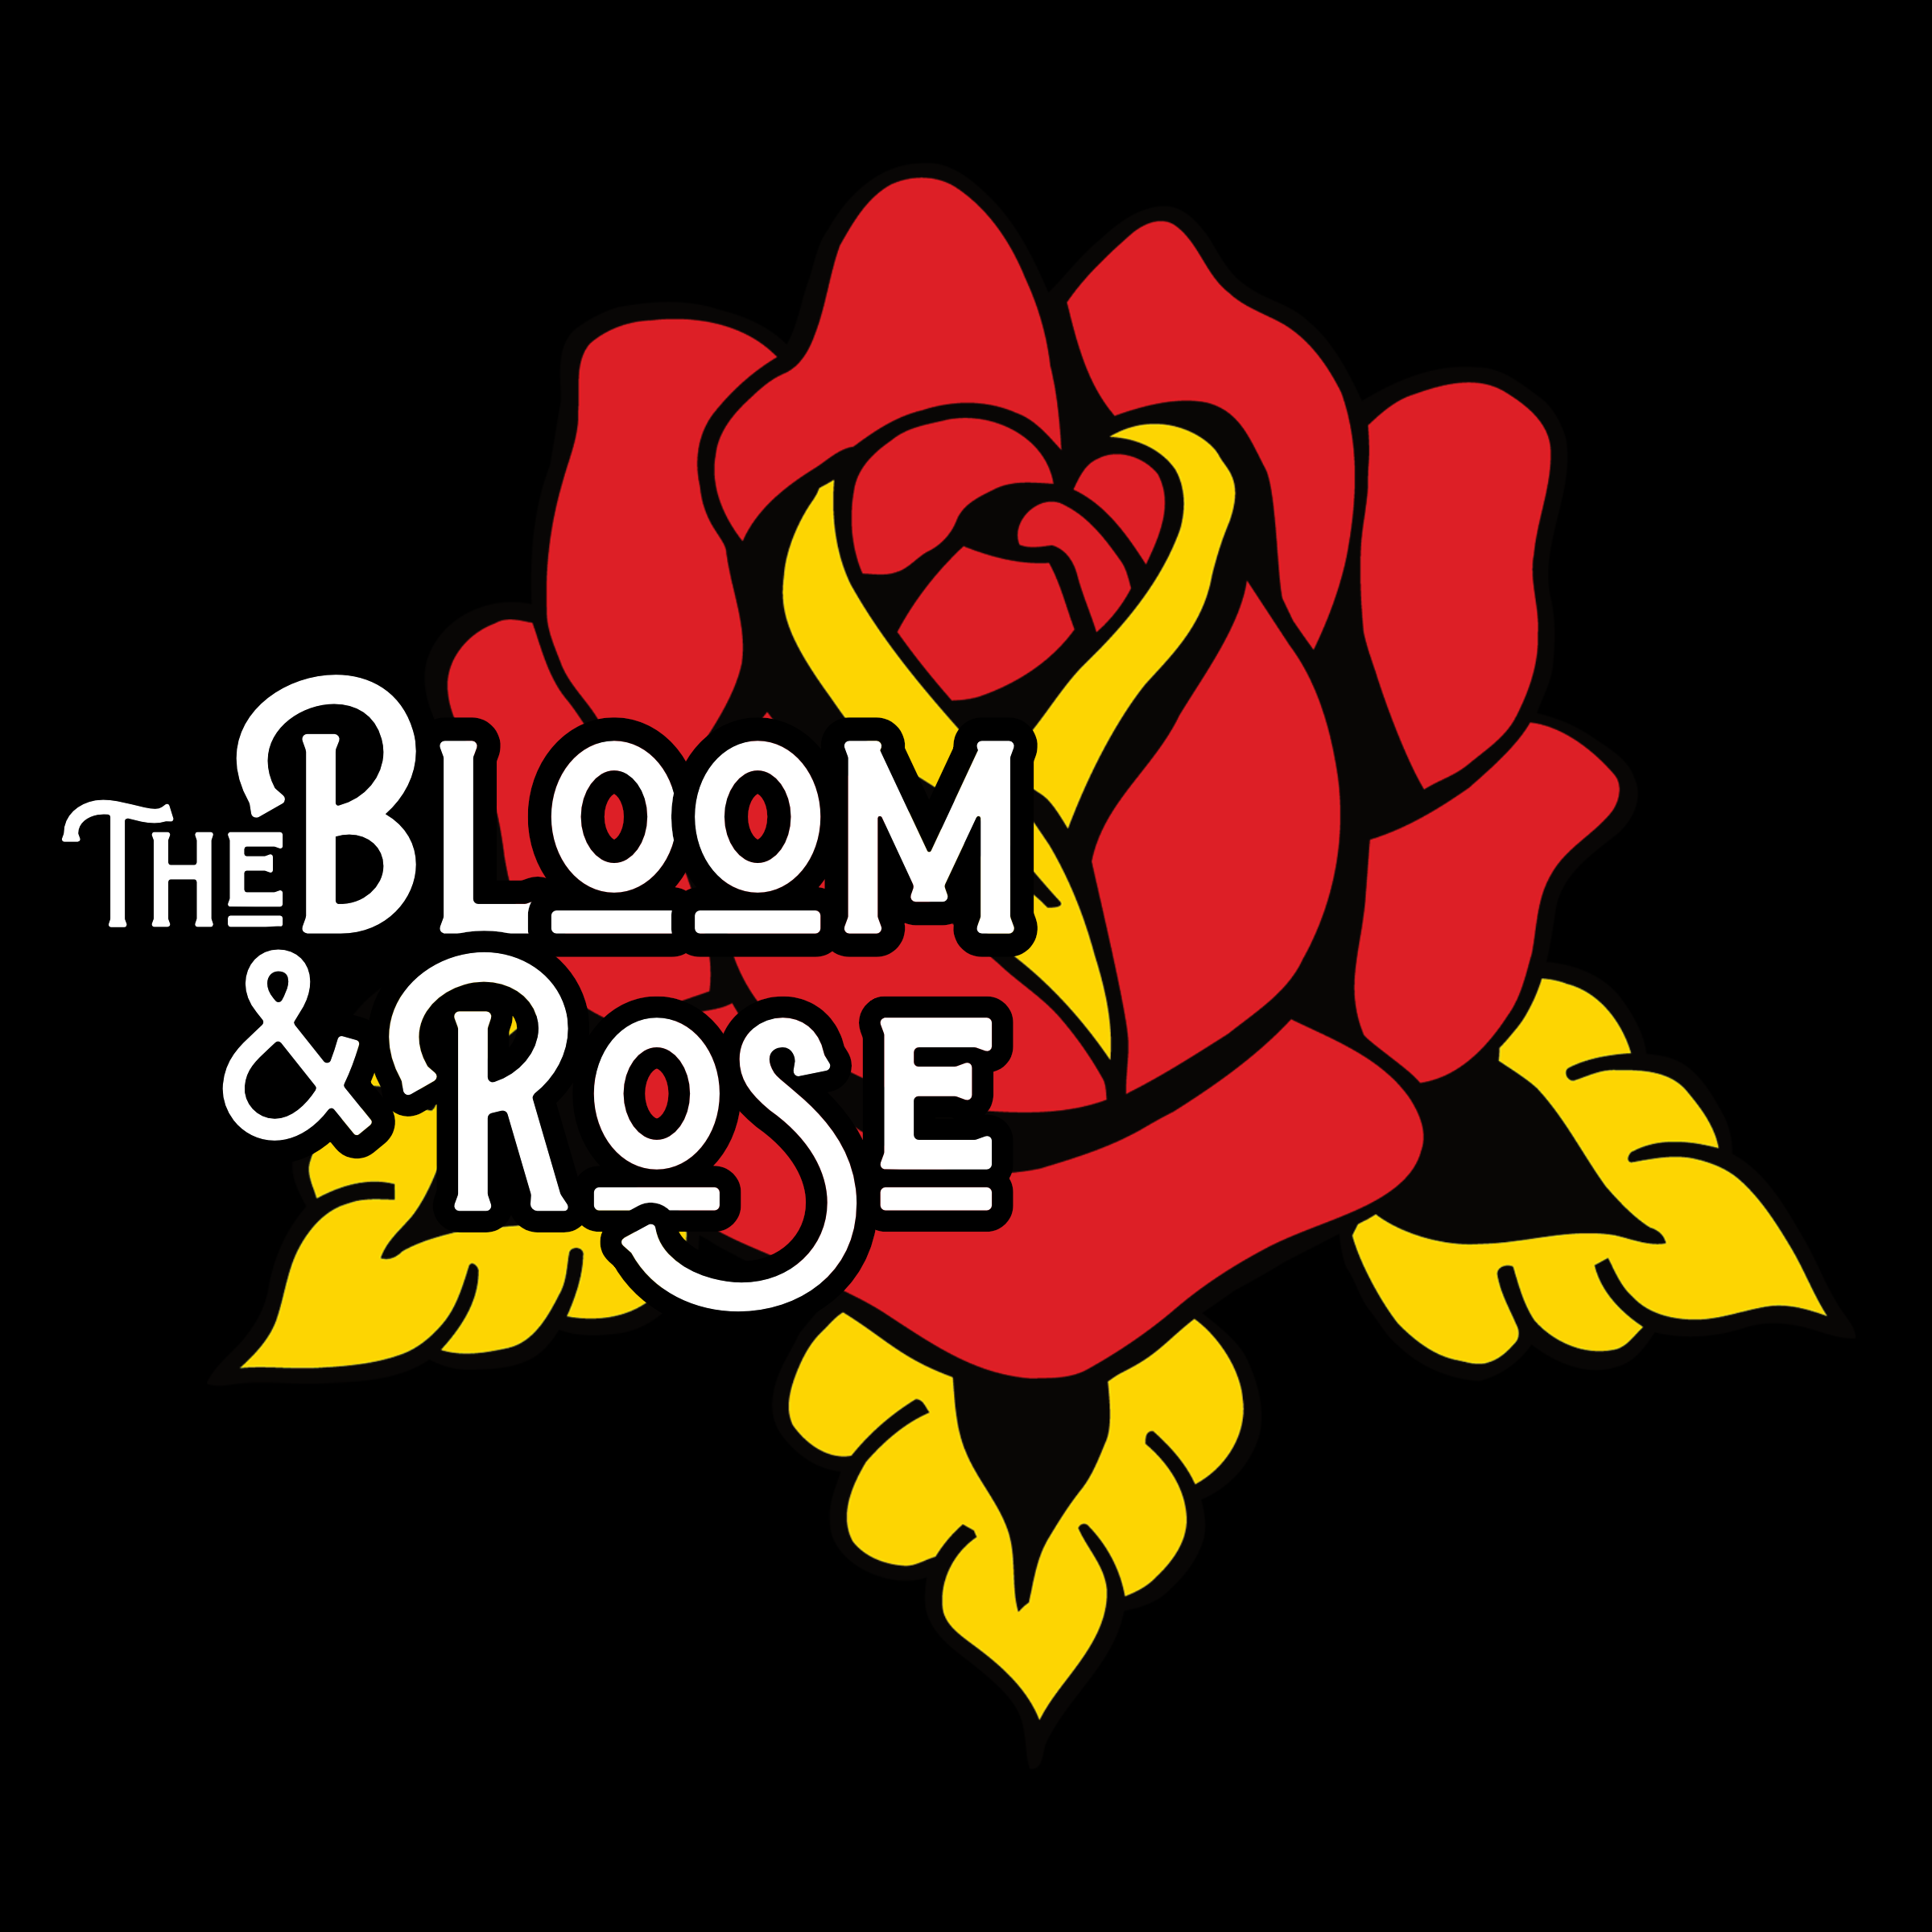 The Bloom & Rose logo